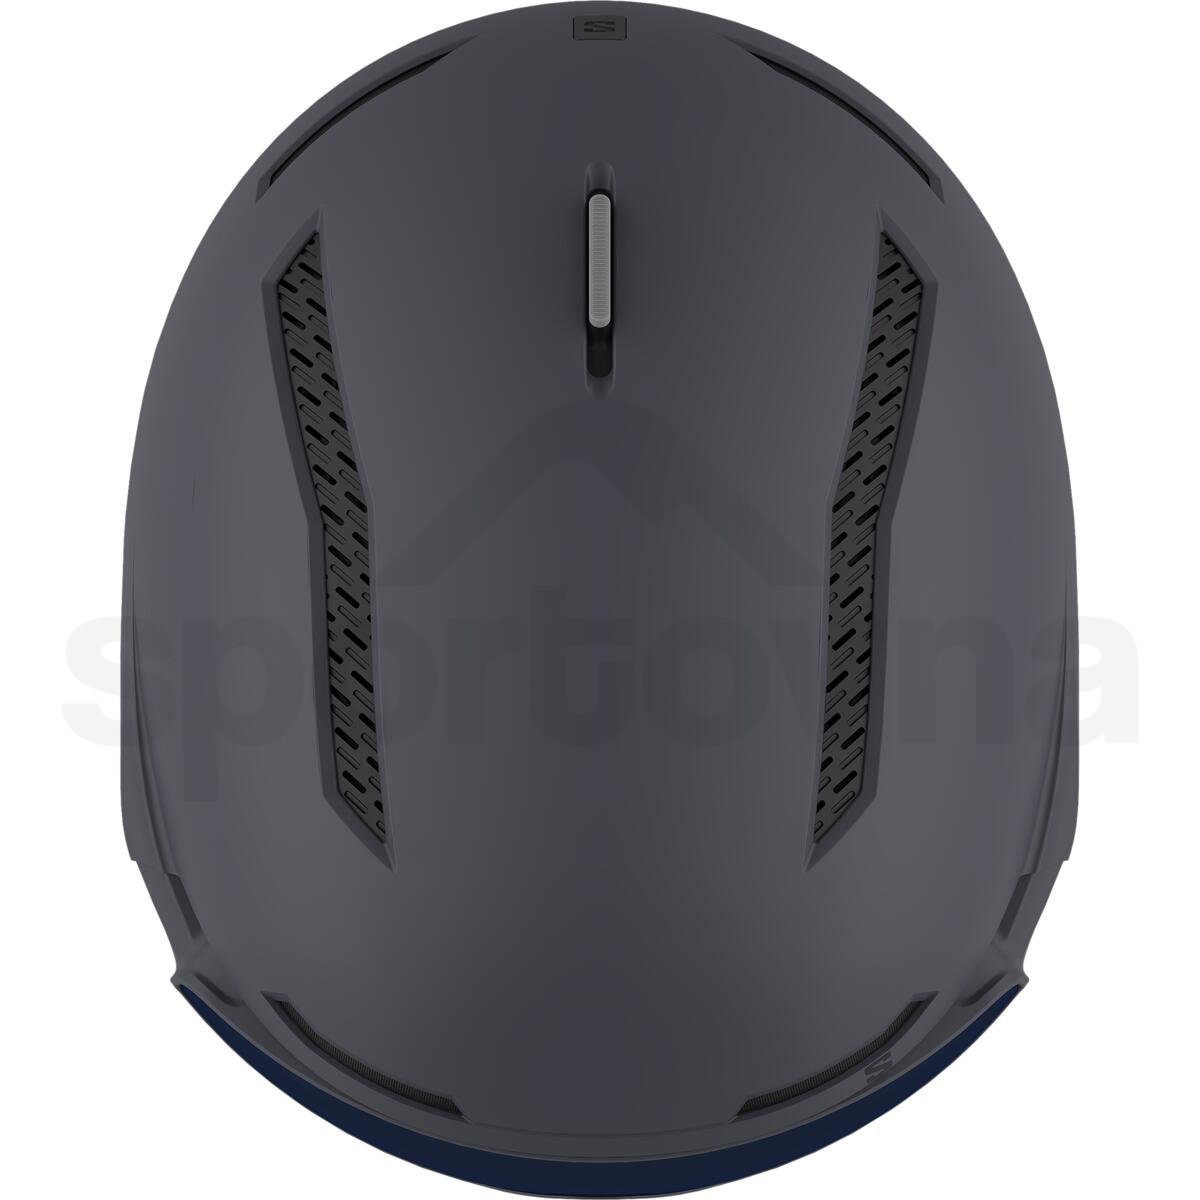 Lyžařská helma Salomon Driver Pro Sigma - šedá